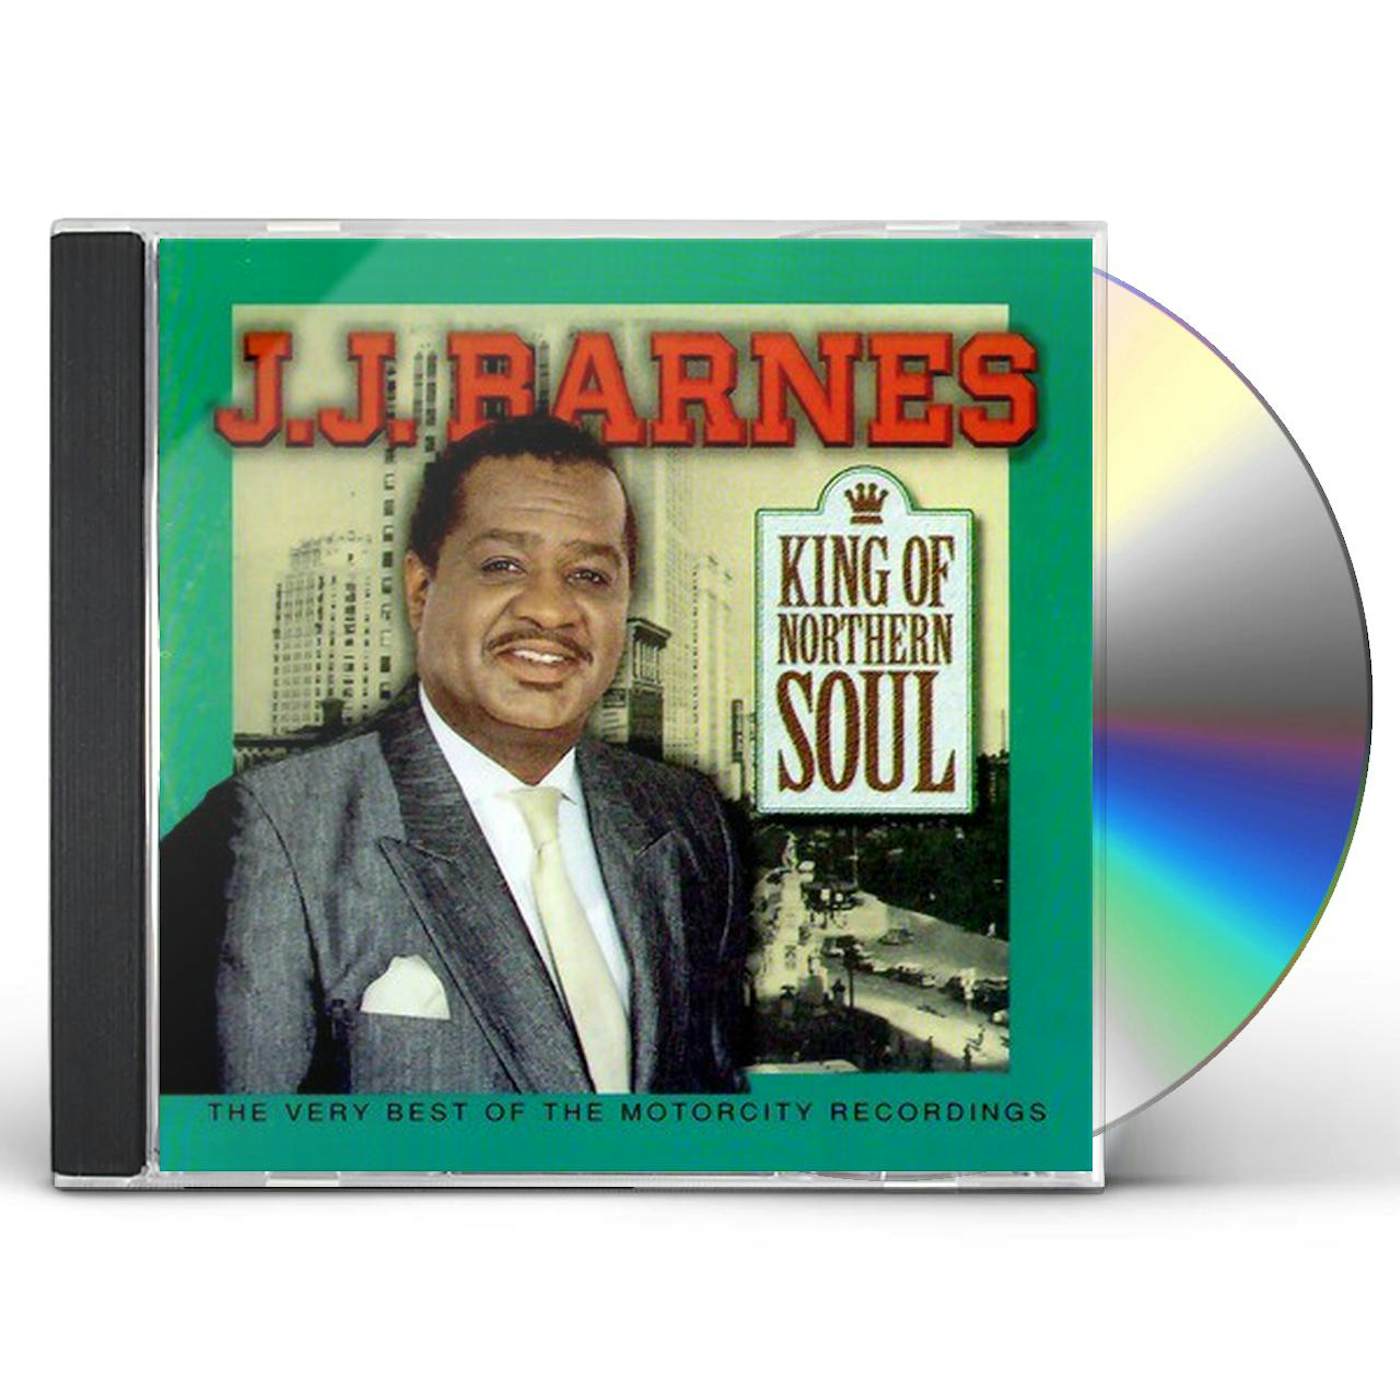 J.J. Barnes KING OF NORTHERN SOUL CD